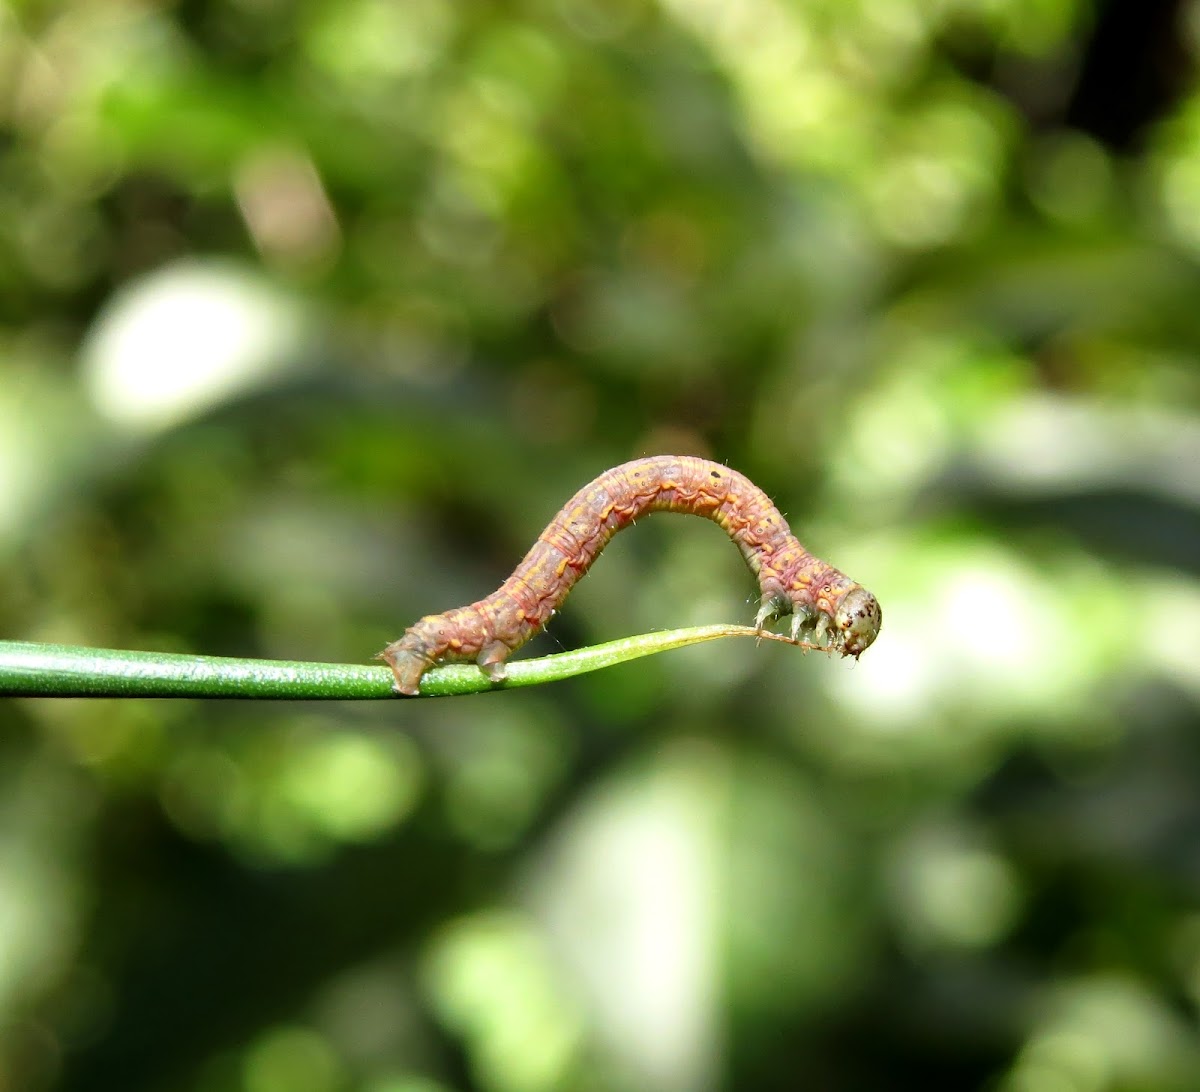 Inch worm